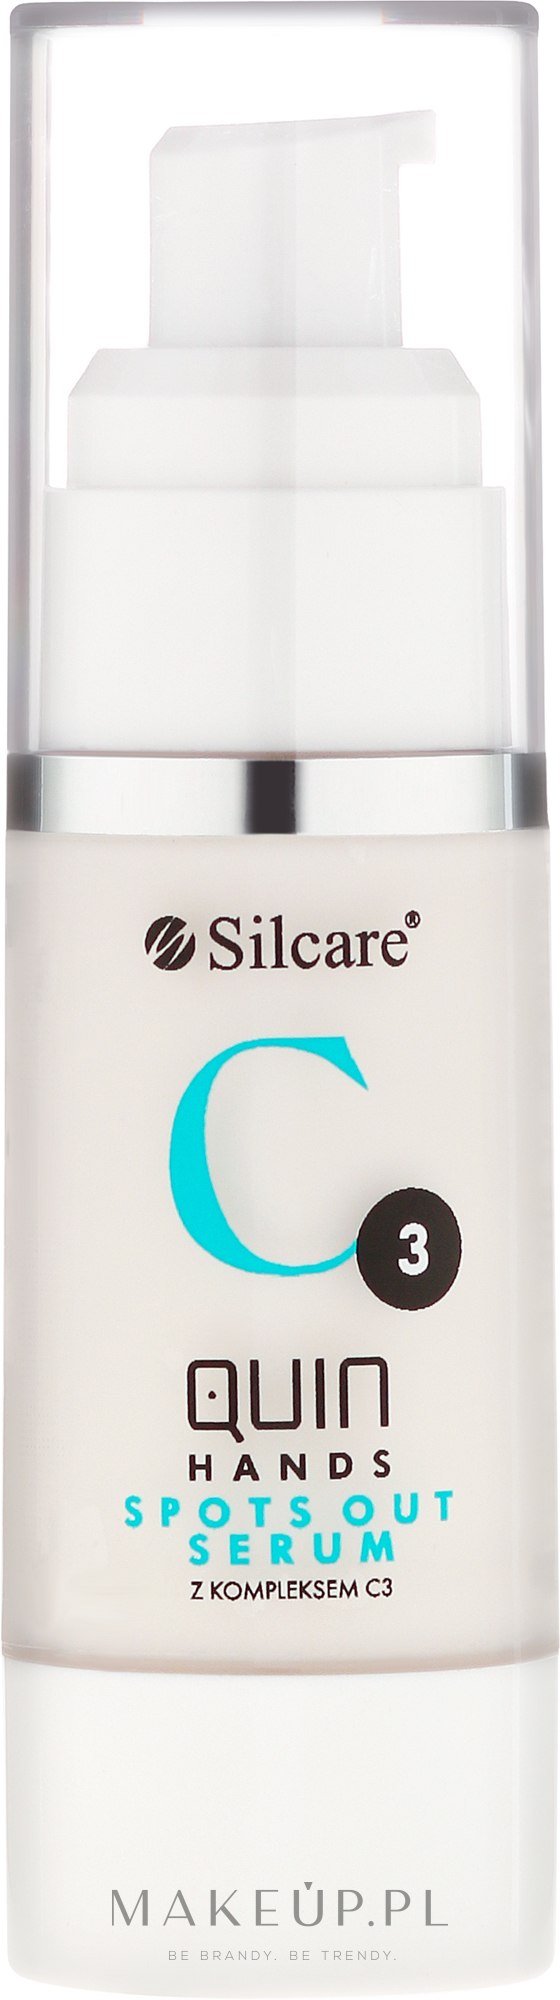 Serum do rąk niwelujące przebarwienia - Silcare Quin Hands Spots Out Serum C3 Complex — Zdjęcie 30 ml